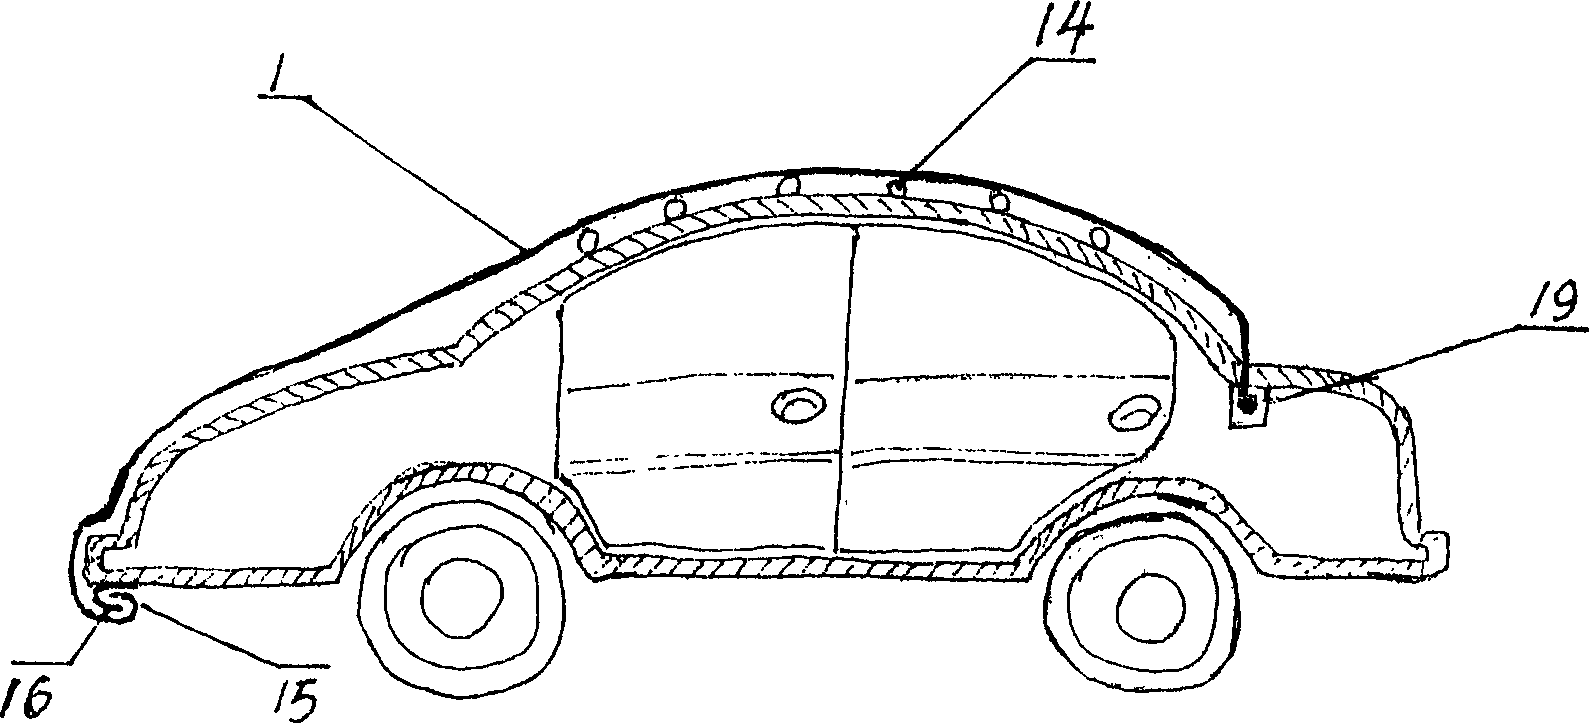 Reeling type automobile sunshade inclosure